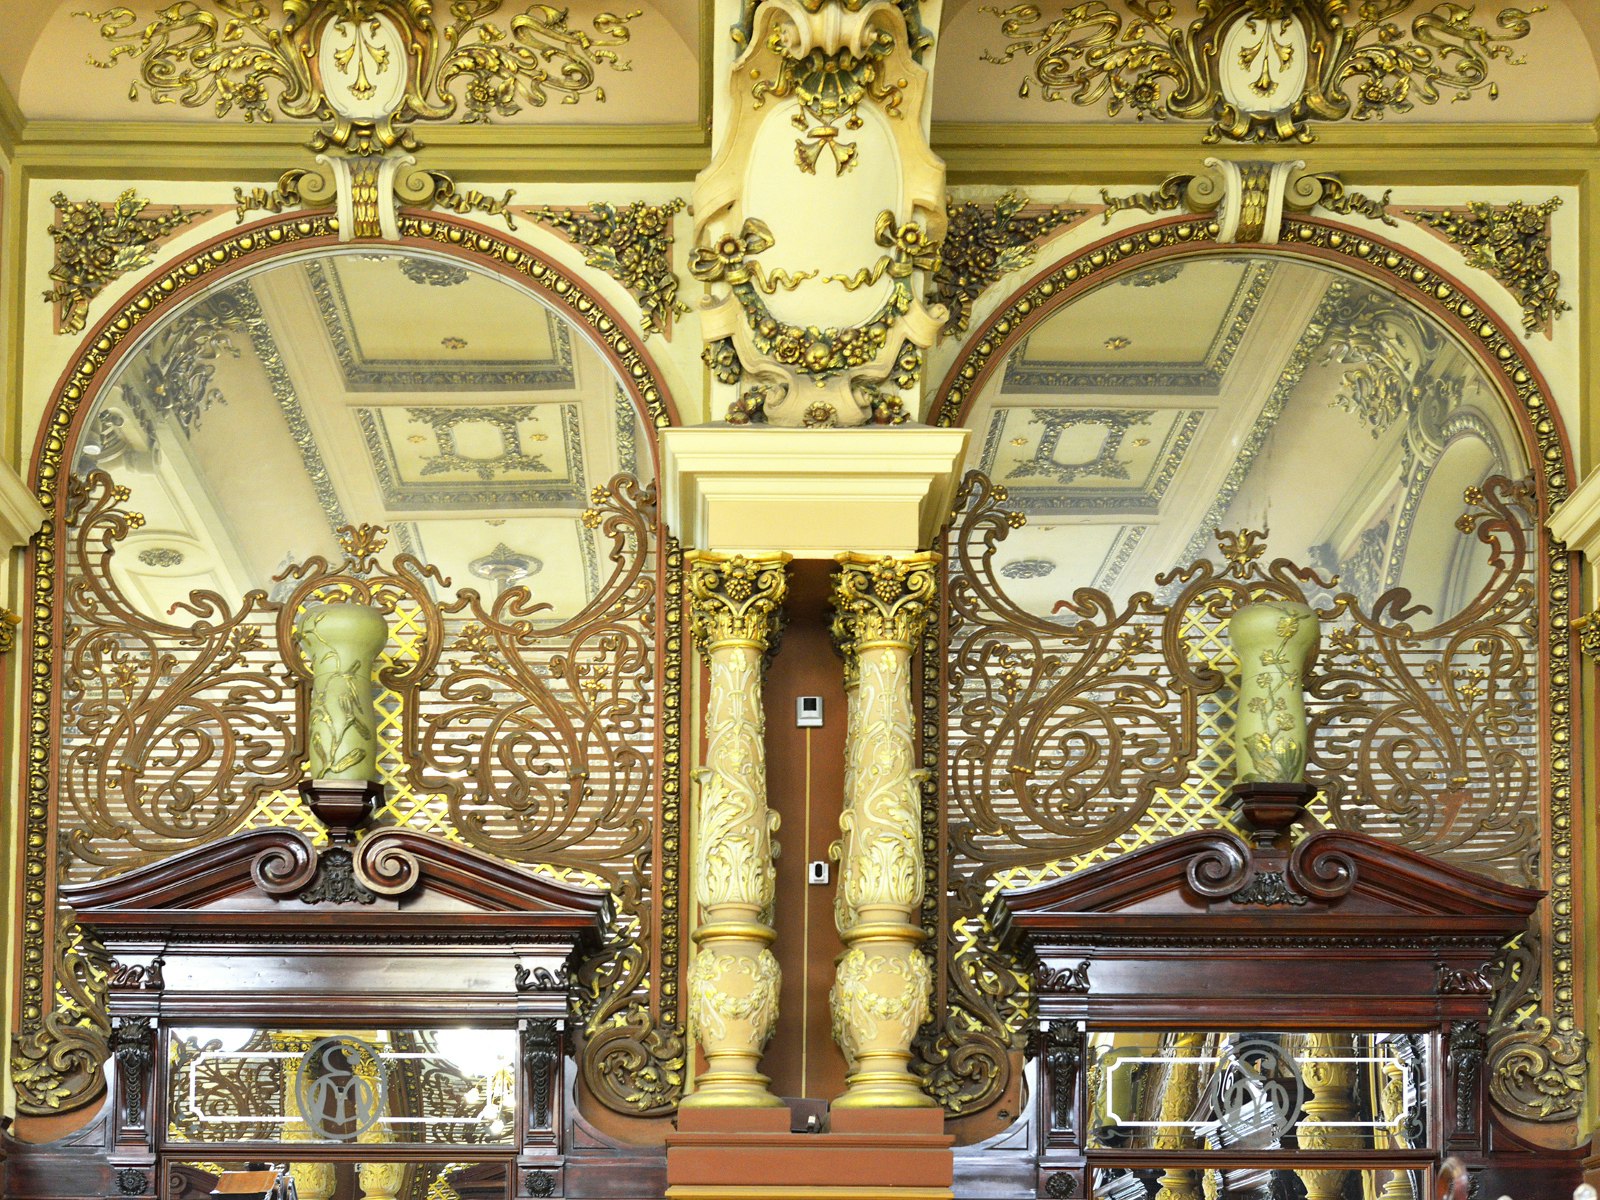 The ornate Baroque Revival–style interior of Moscow's Yeliseev Grocery © Popova Valeriya / Shutterstock